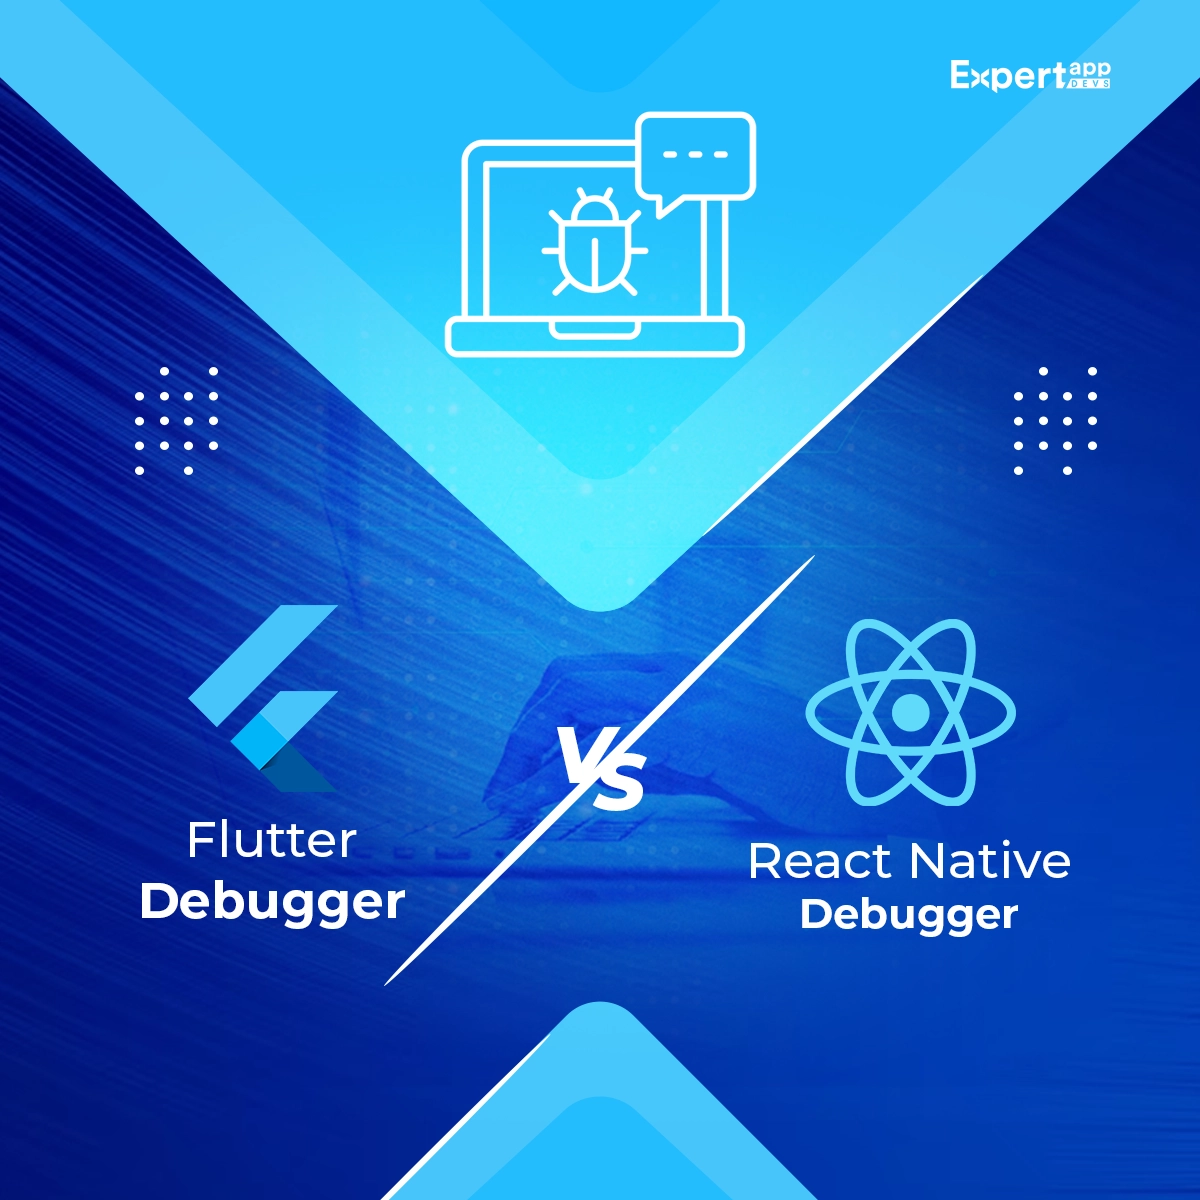 Flutter Debugger vs ReactNative Debugger